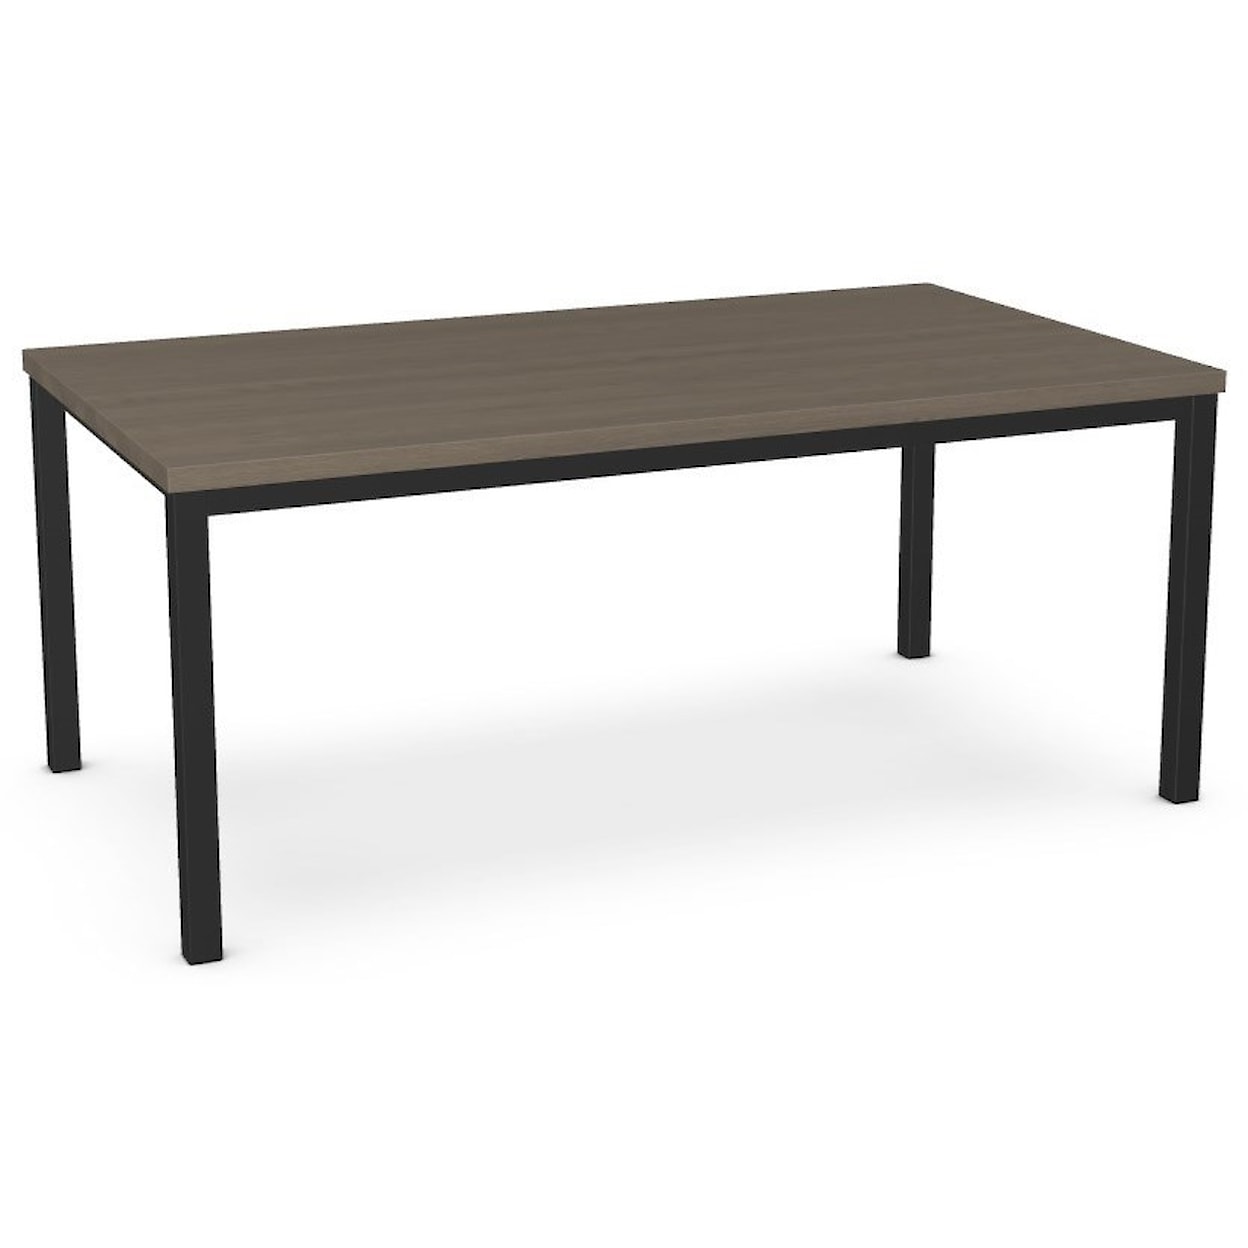 Amisco Urban Bennington Table with Solid Wood Top